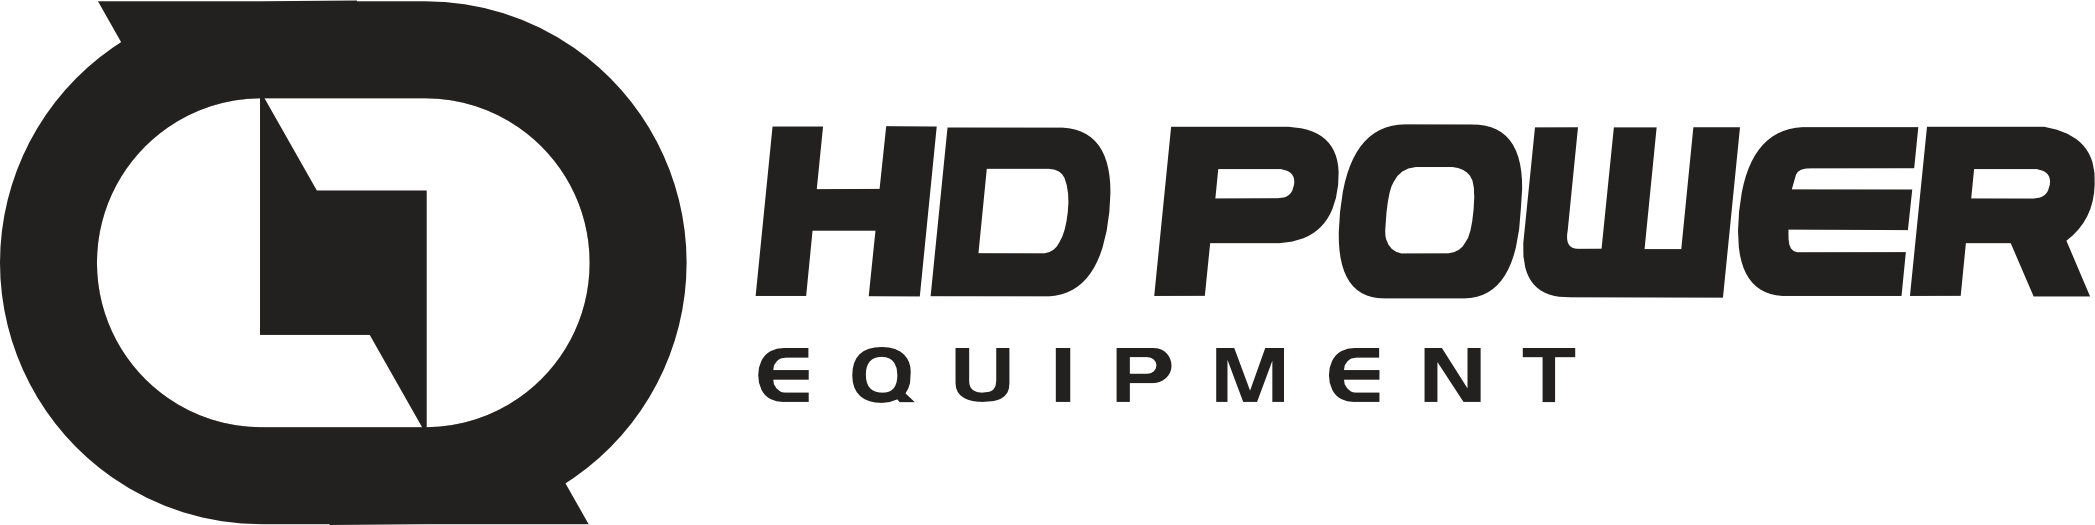 hd-power-equipment-logo-black-and-white-horizontal